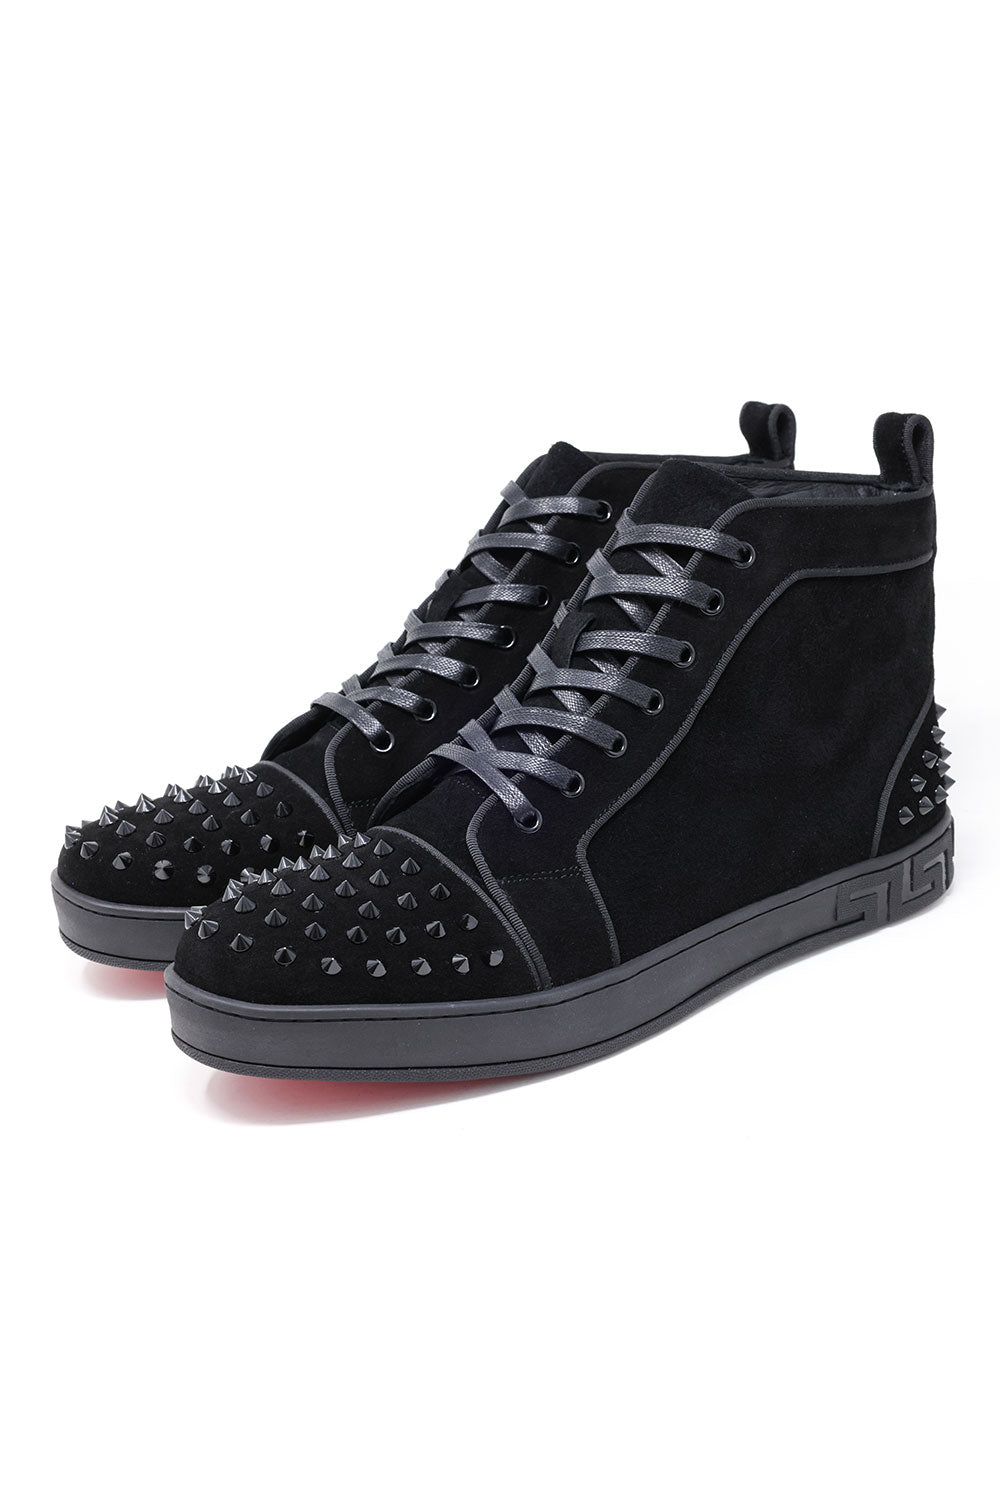 Barabas Men's Spike Design Luxury Suede High-Top Sneaker SH732 Black